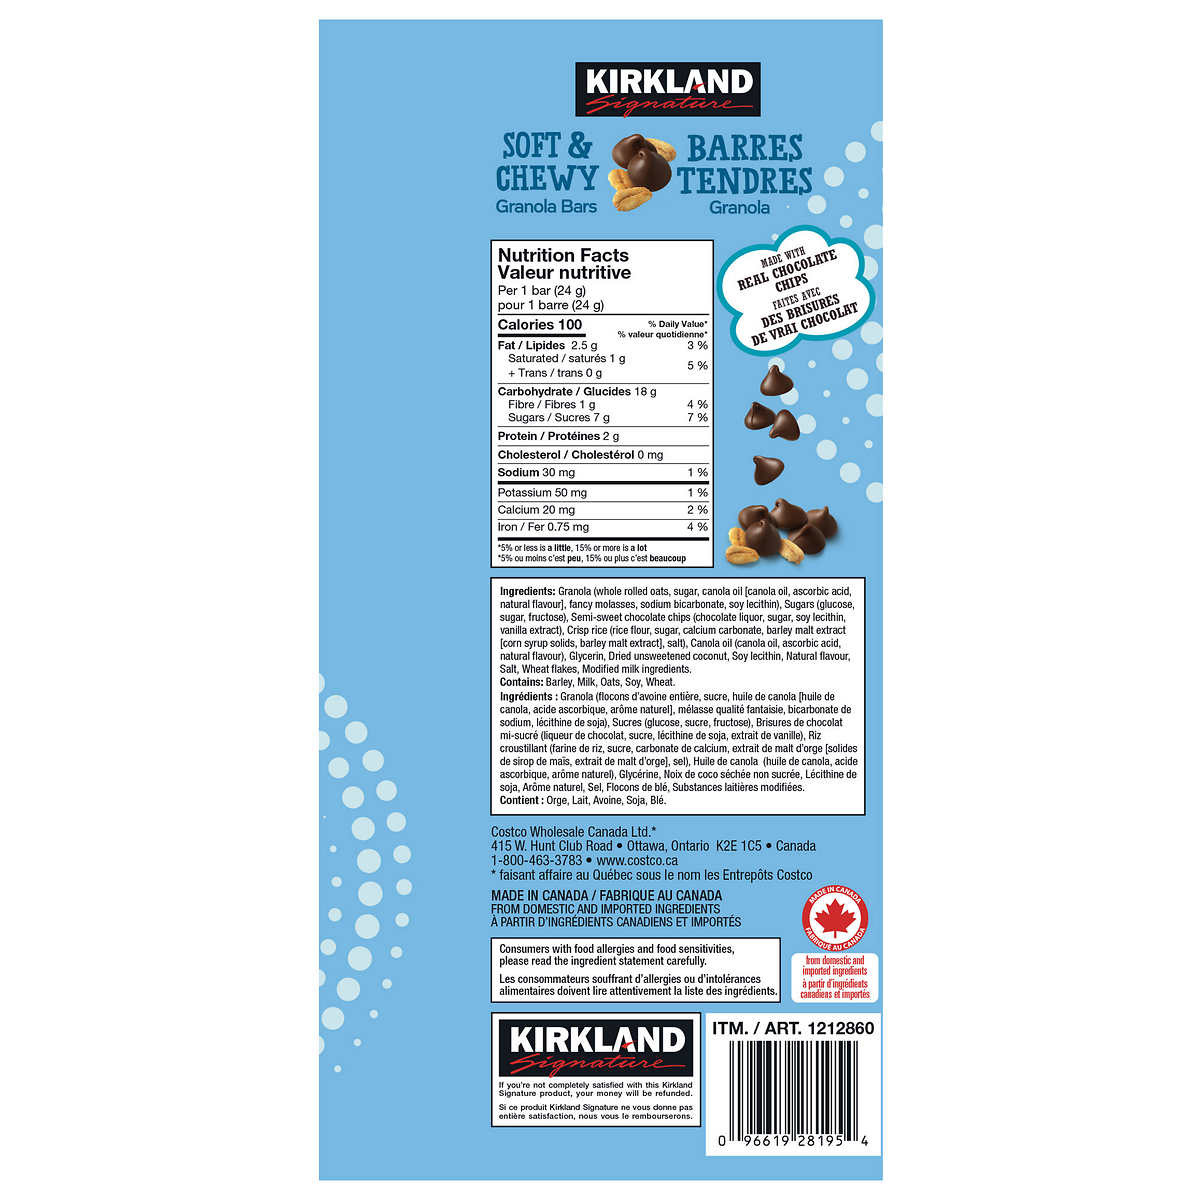 Kirkland Signature Soft & Chewy Granola Bars, 1.54 kg